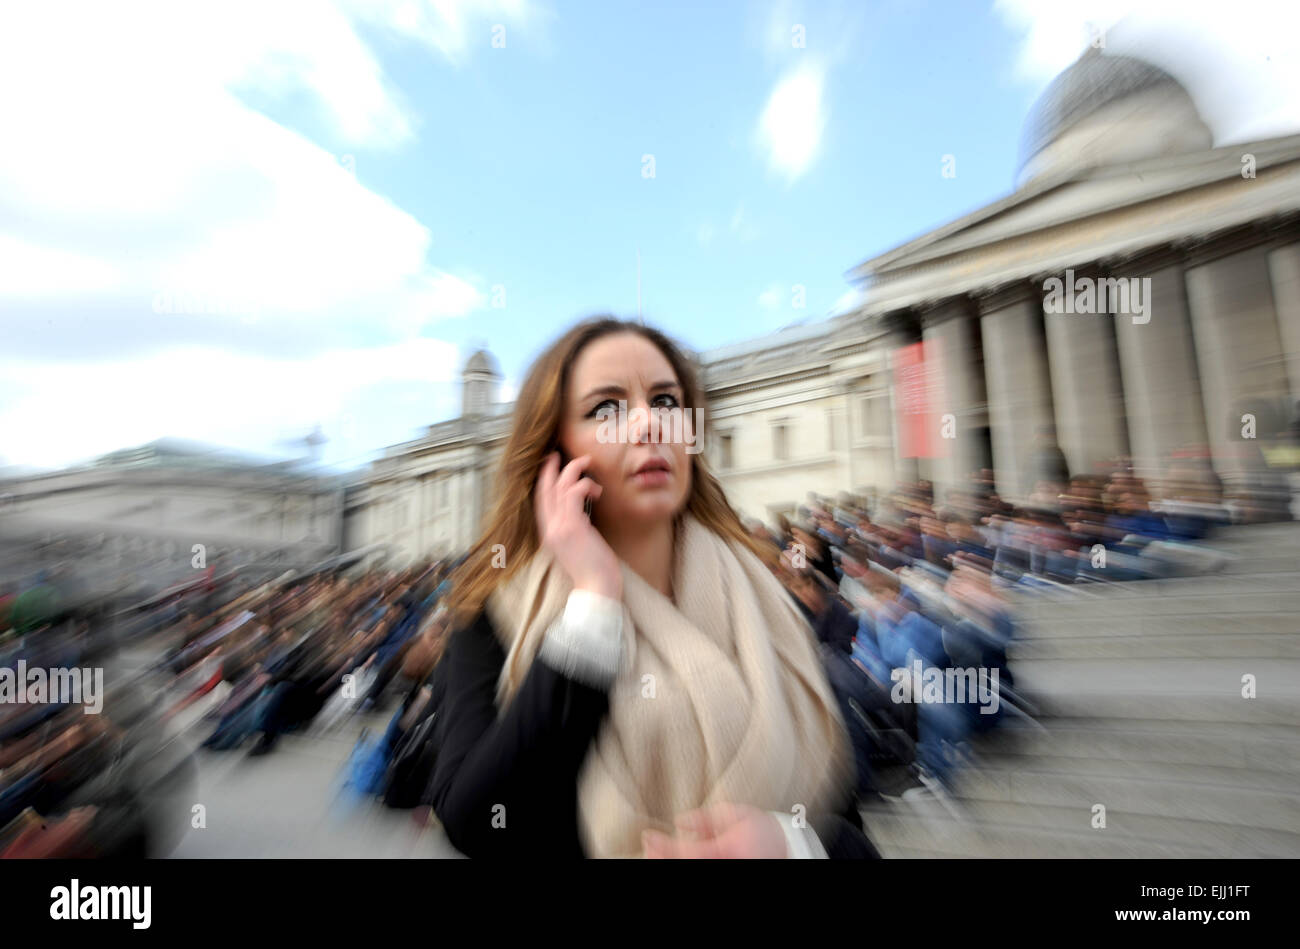 London England UK - junge Frau auf ihrem Mobiltelefon in belebten Trafalgar Square Stockfoto